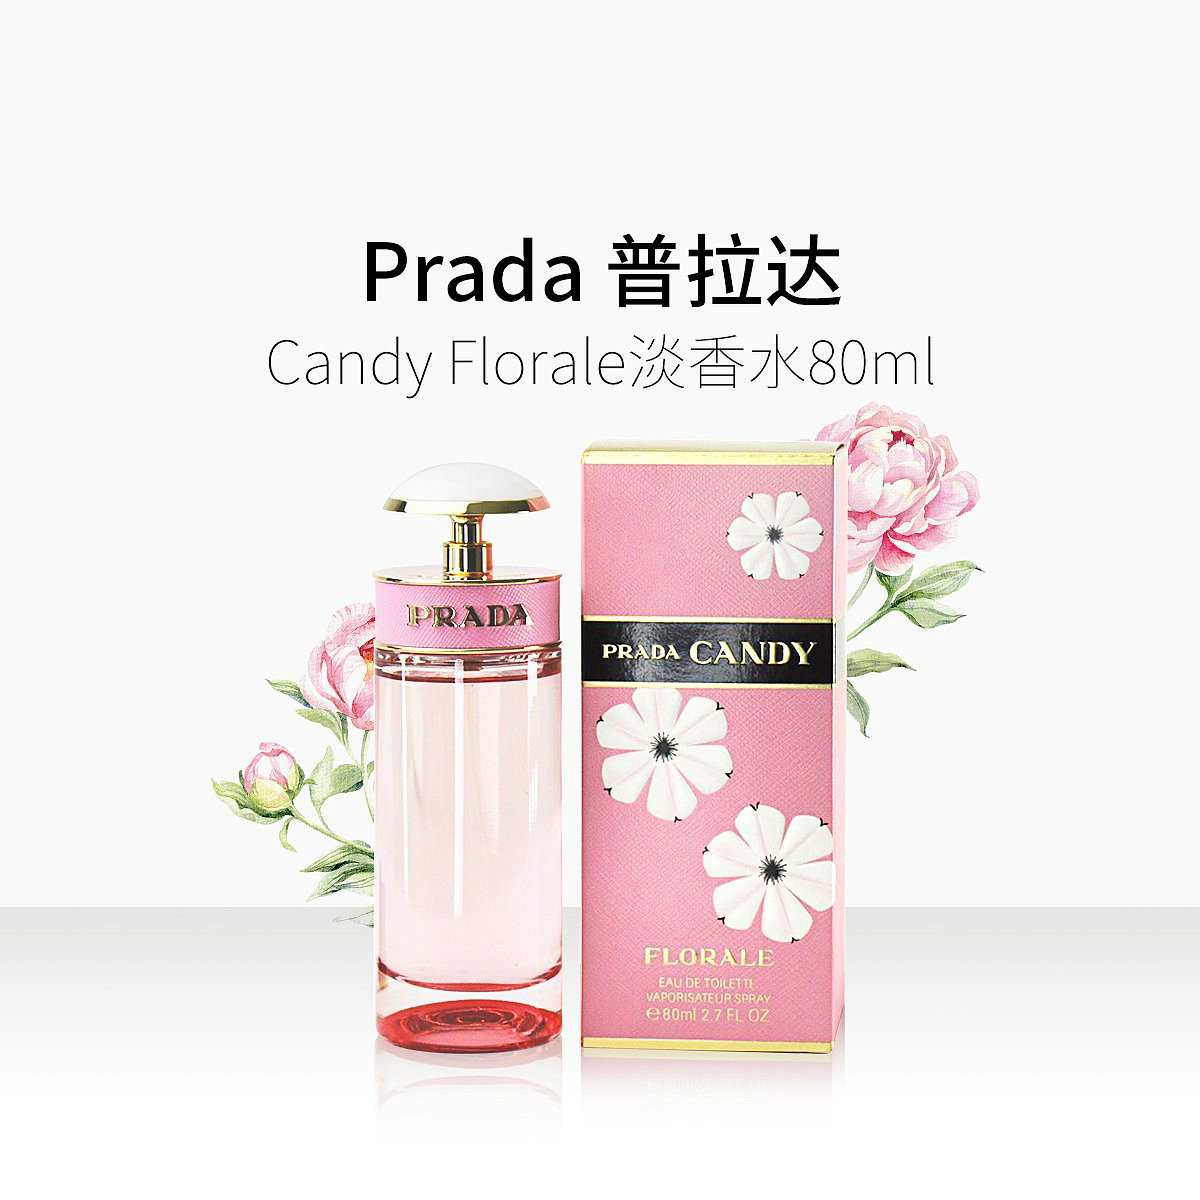 PRADA 普拉达 Candy Florale花漾糖果 女士EDT淡香水 80ml563.92元含税包邮